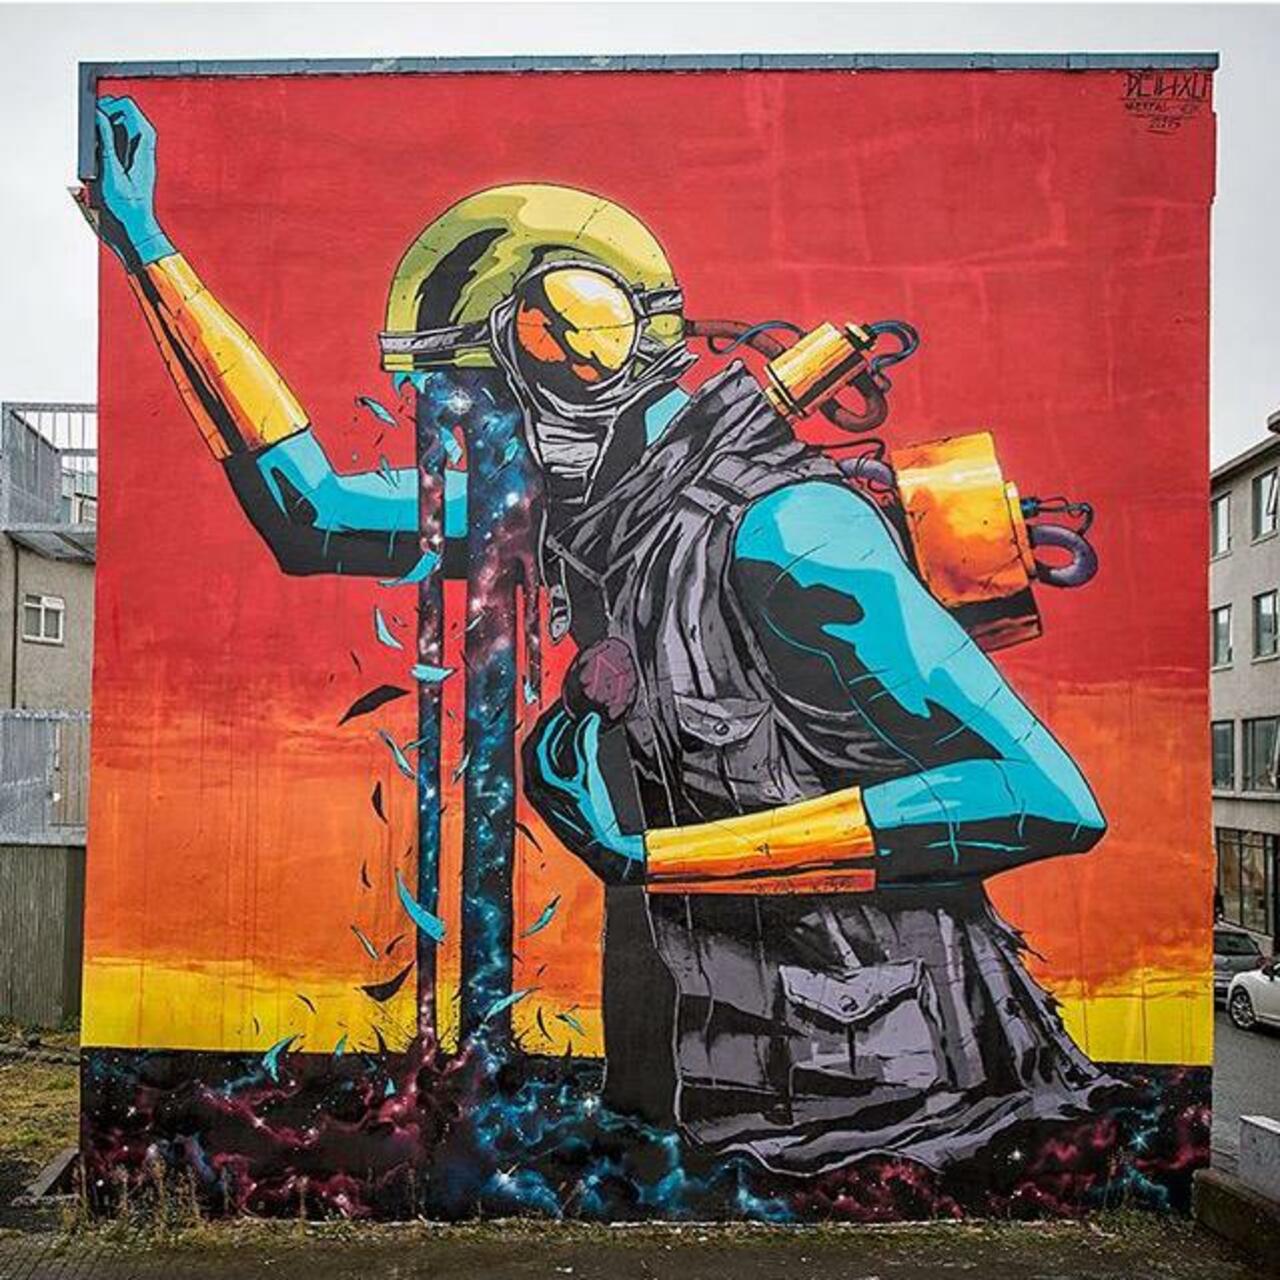 Street Art by Deih in Reykjavik 

#art #graffiti #mural #streetart https://t.co/W1qASDmSkh